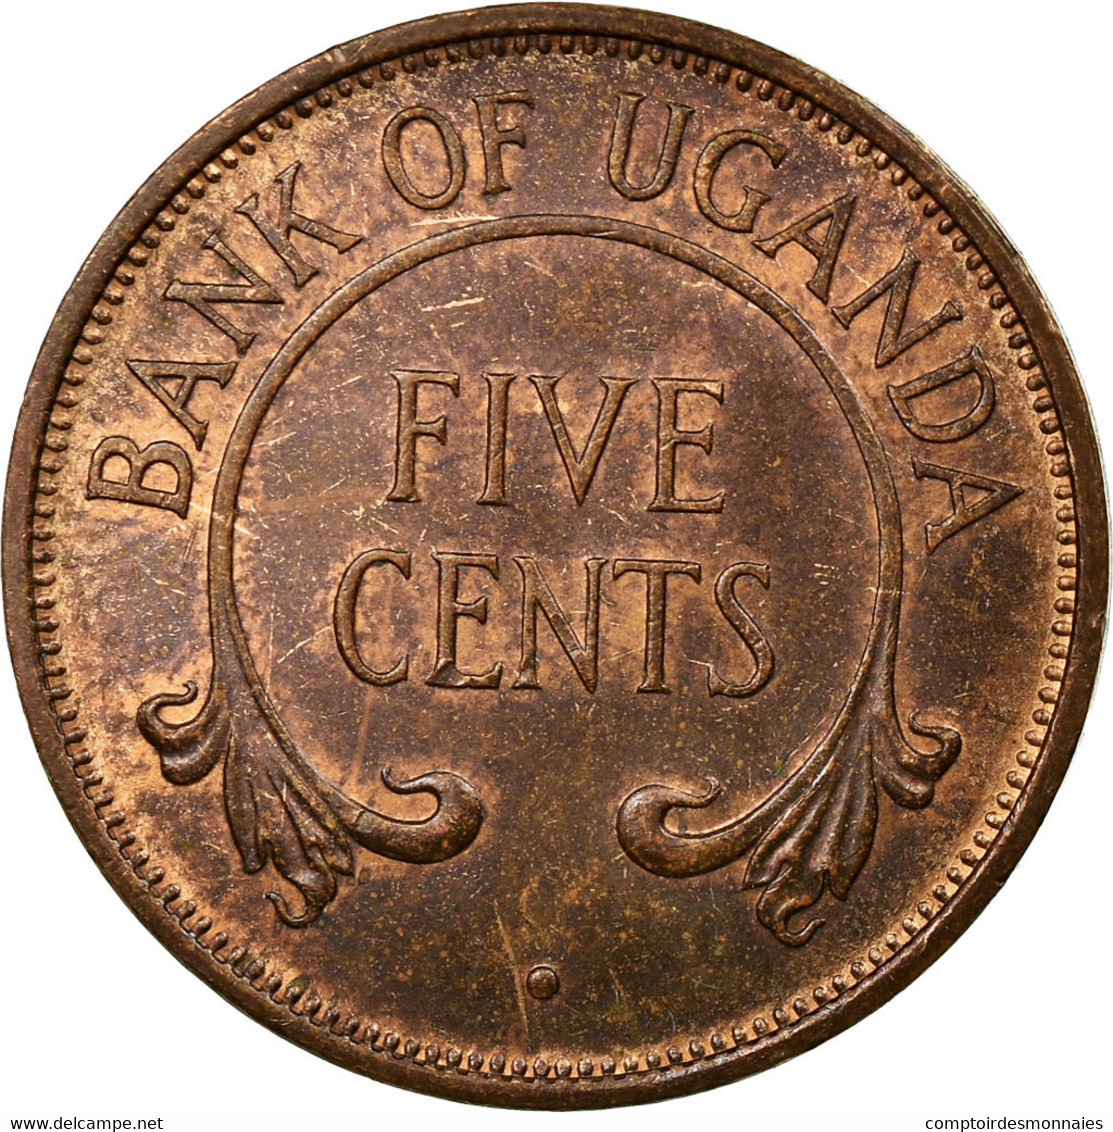 Monnaie, Uganda, 5 Cents, 1966, TB+, Bronze, KM:1 - Uganda